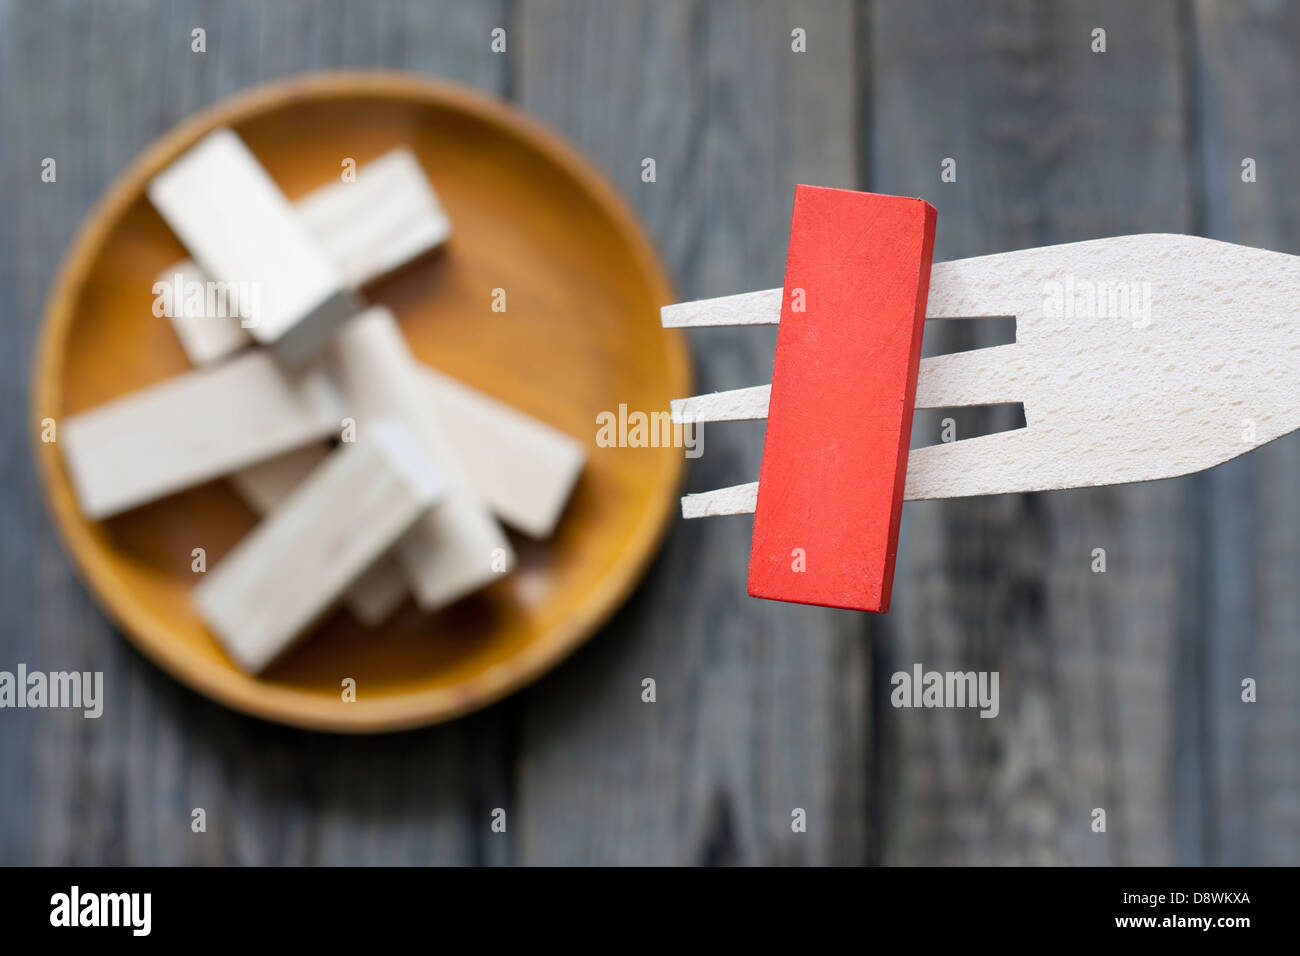 Unhealthy junk food creative concept comparison to wooden blocks Stock Photo